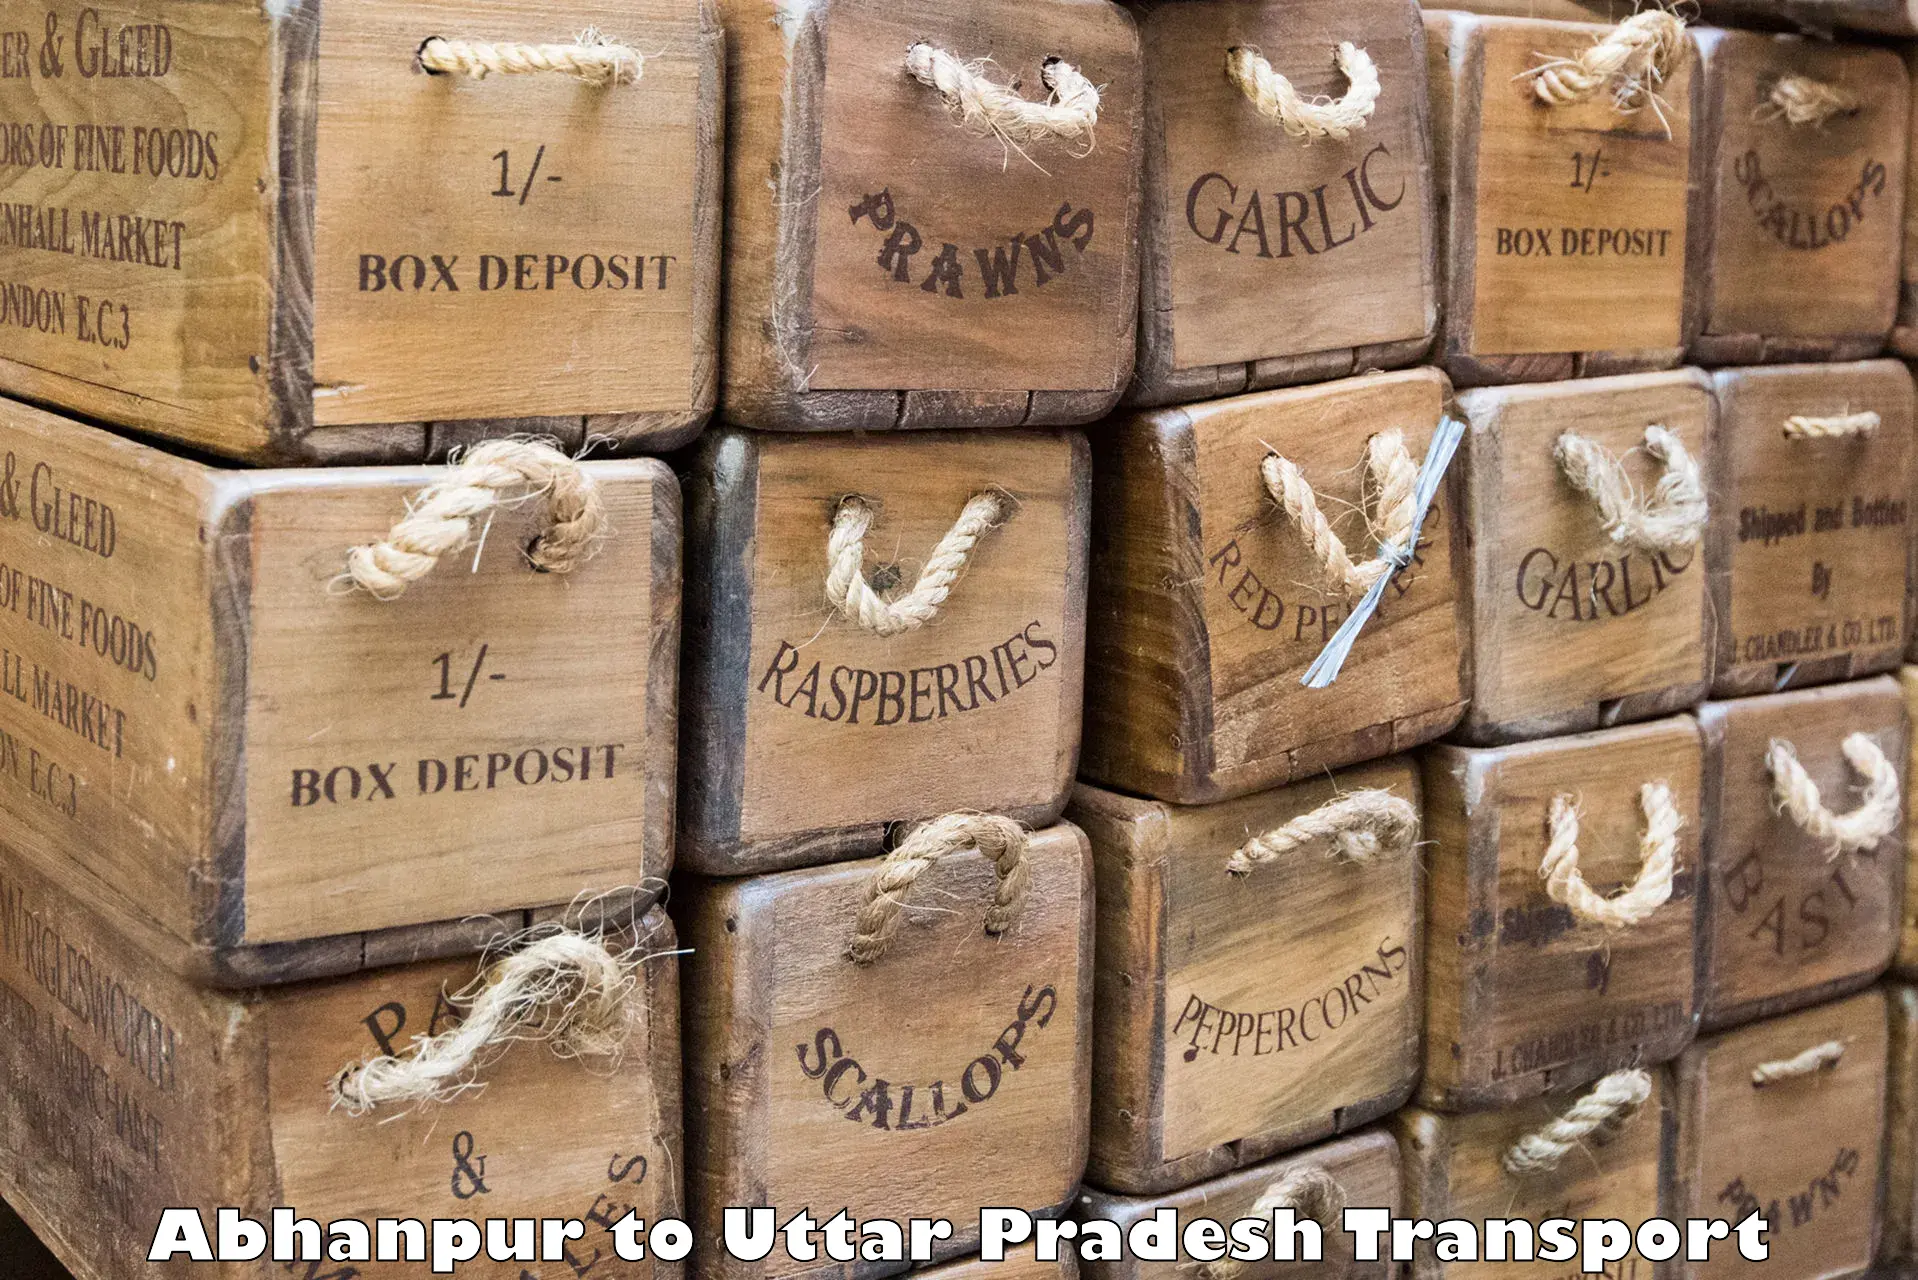 Truck transport companies in India Abhanpur to Gauri Bazar